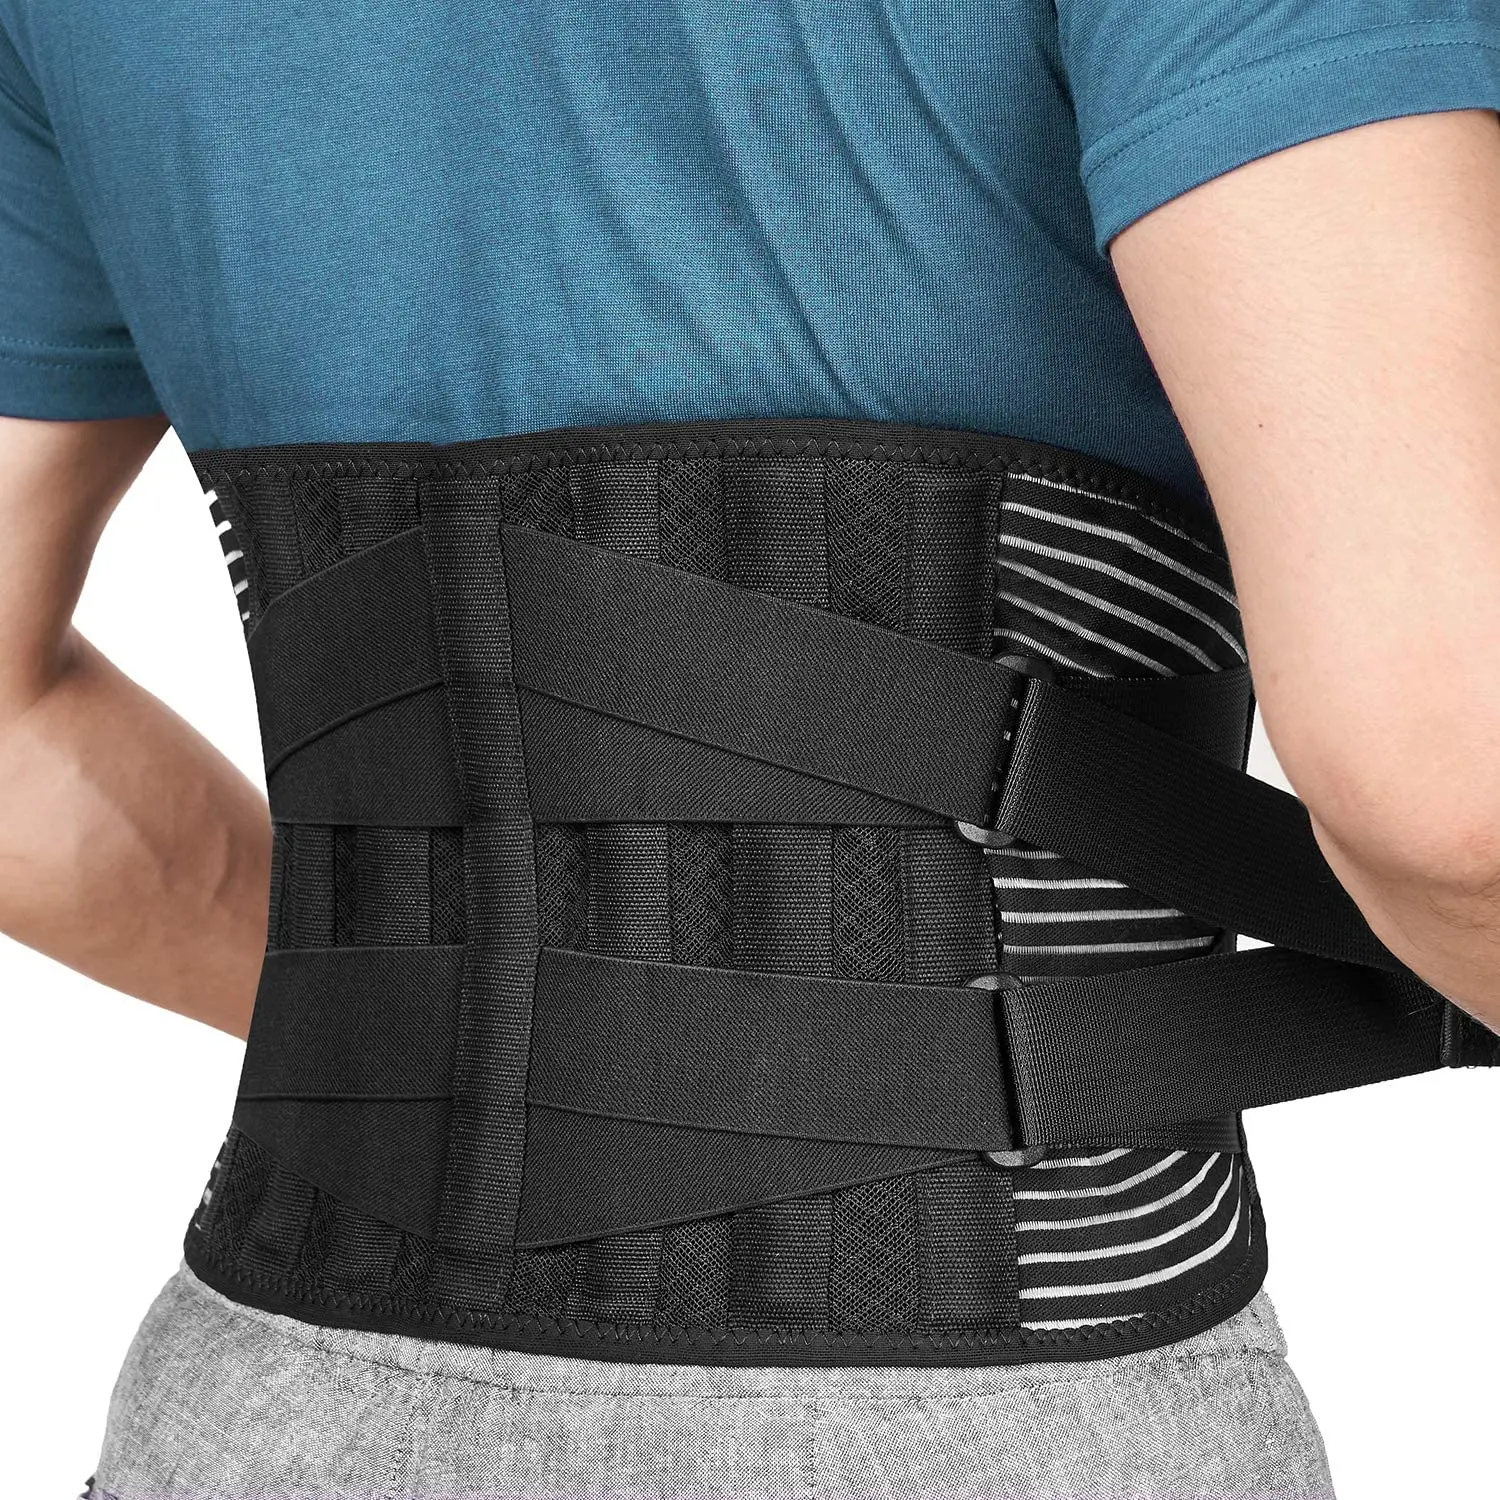 

Factory Breathable Anti-skid Lower Back Pain Relief Waist Support Lumbar Belt Back Braces for Men & Women, Black